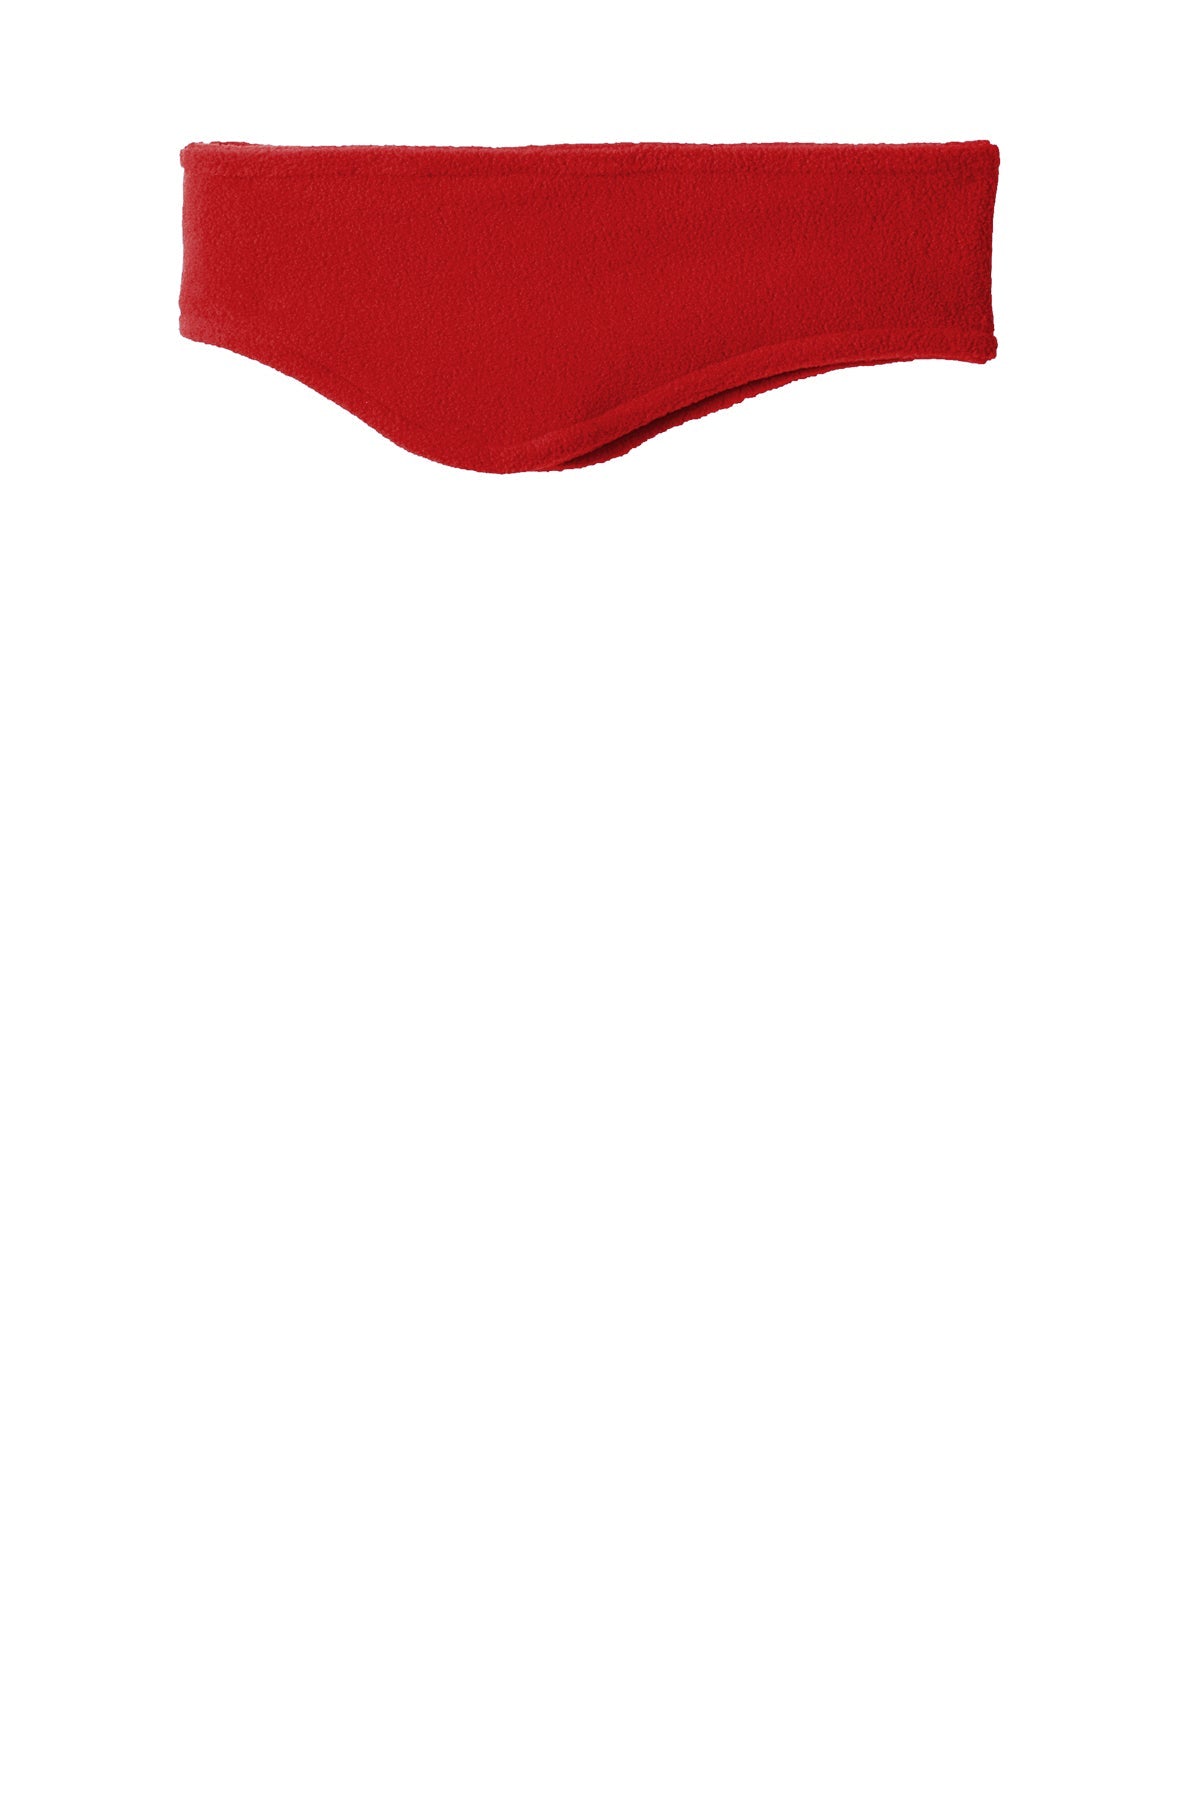 Port Authority R-Tek Stretch Fleece Customized Headbands, Red